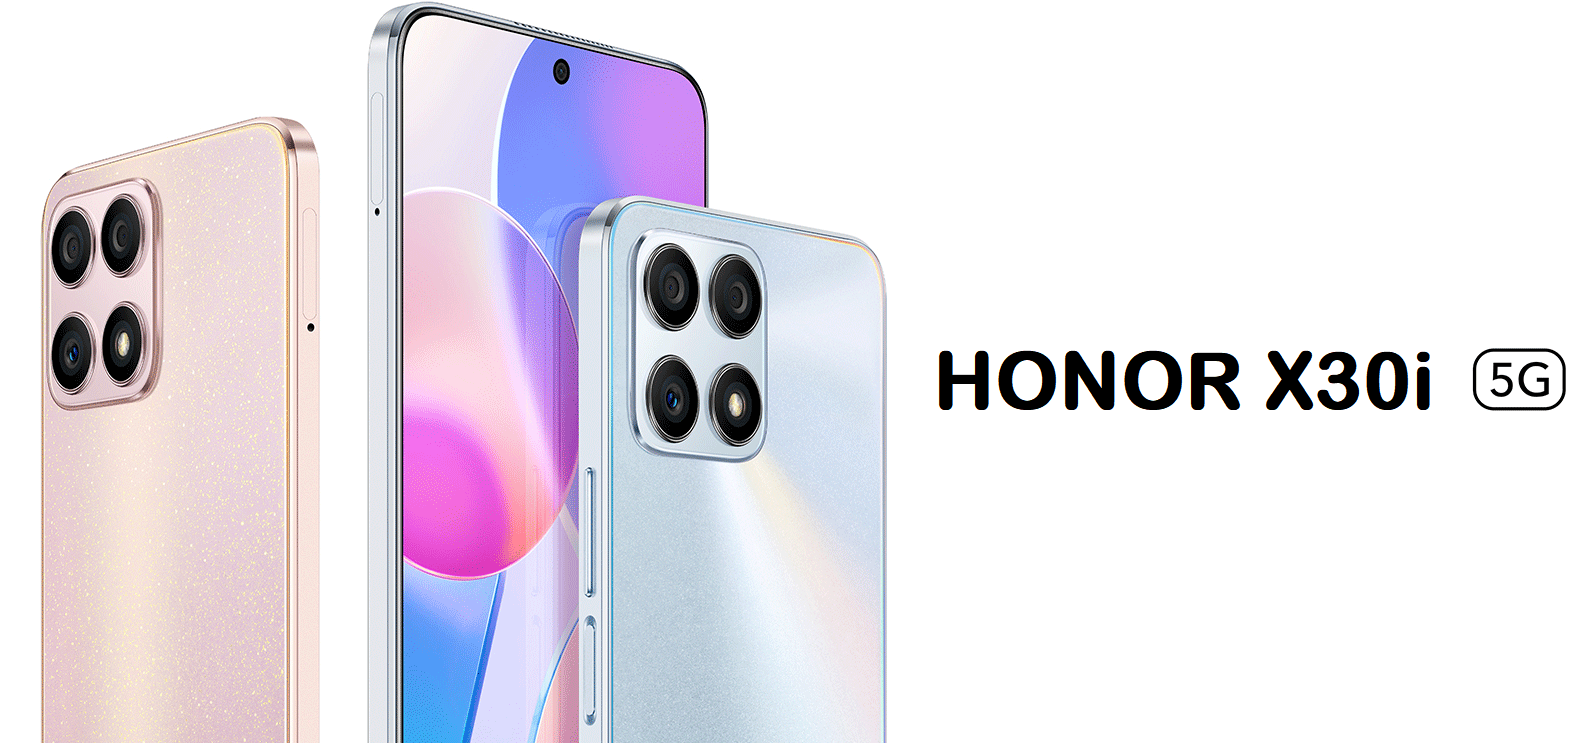 Honor X30i - Dimensity 810, 48MP Kamera, Android 11 und Magic UI 5.0 zu einem Preis ab $220